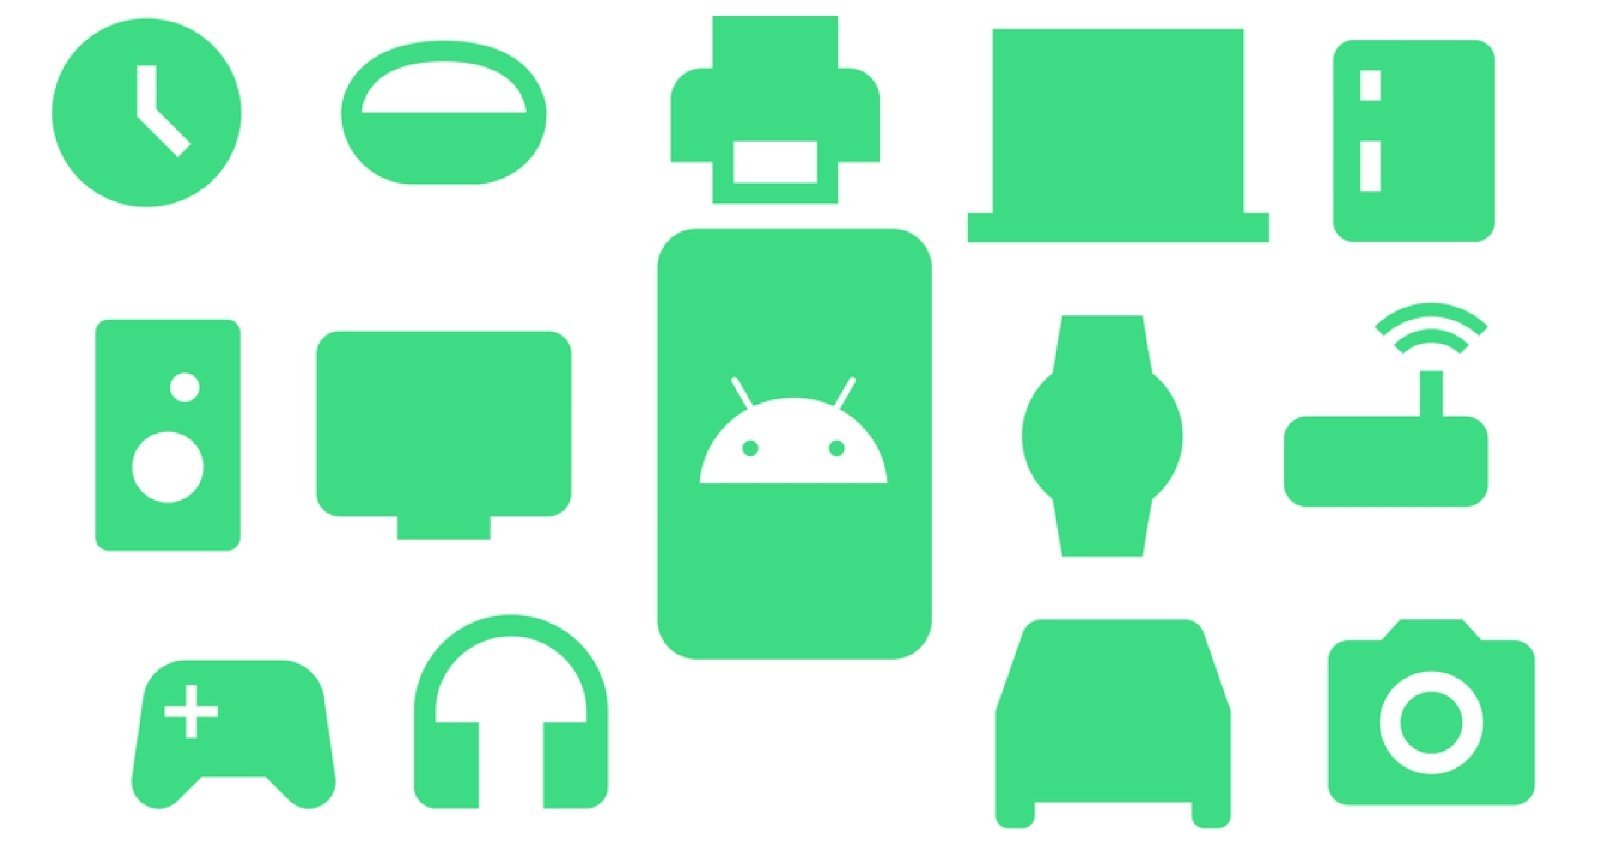 Ecosistema de dispositivos Android